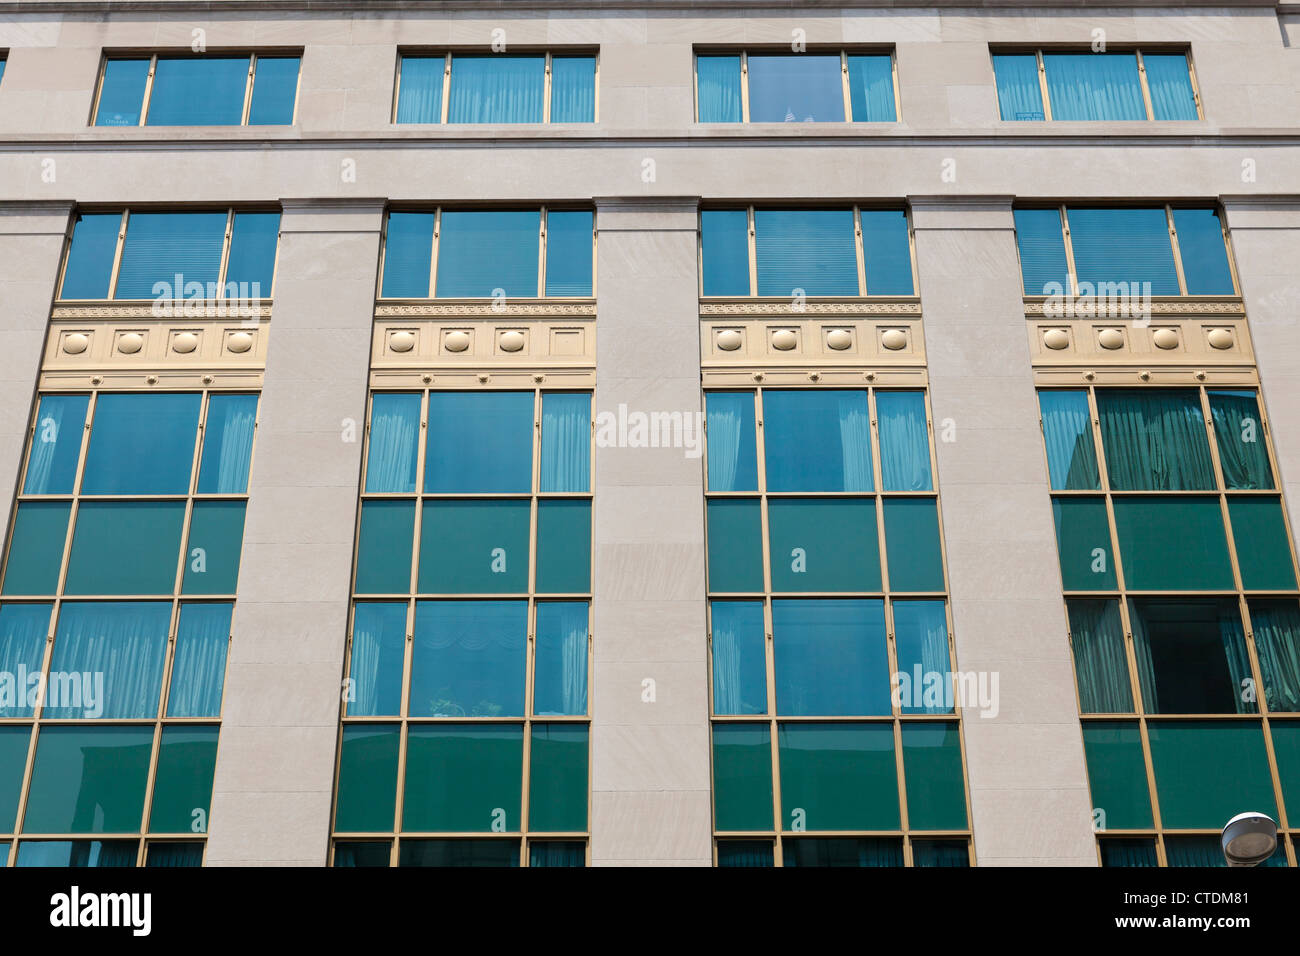 Retro office building windows Stock Photo